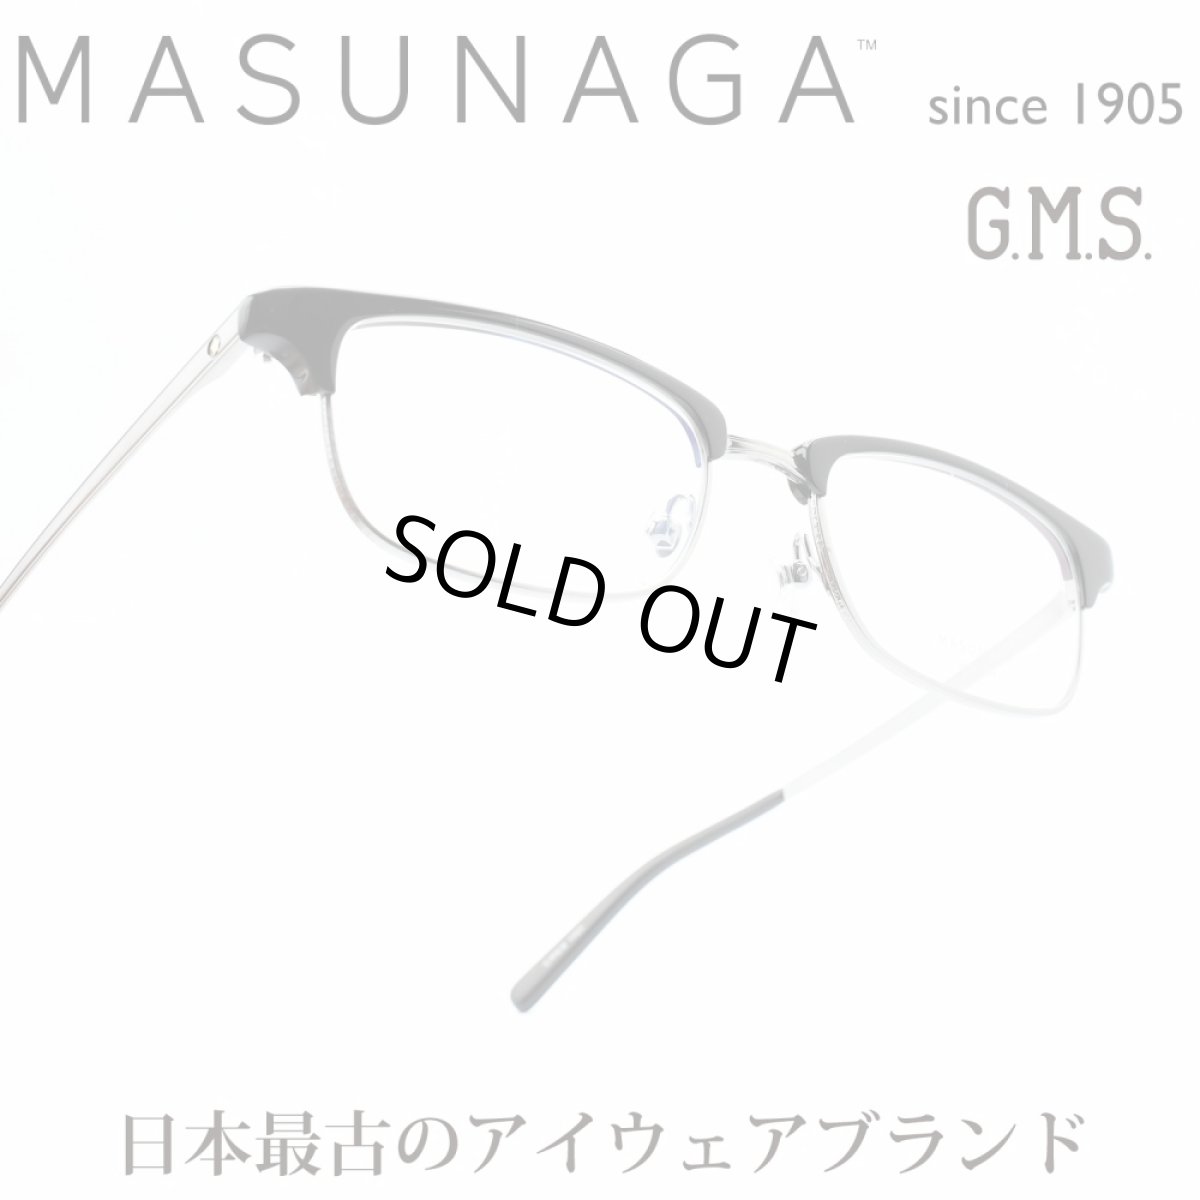 画像1: 増永眼鏡 MASUNAGA GMS-33 col-49 BK (1)